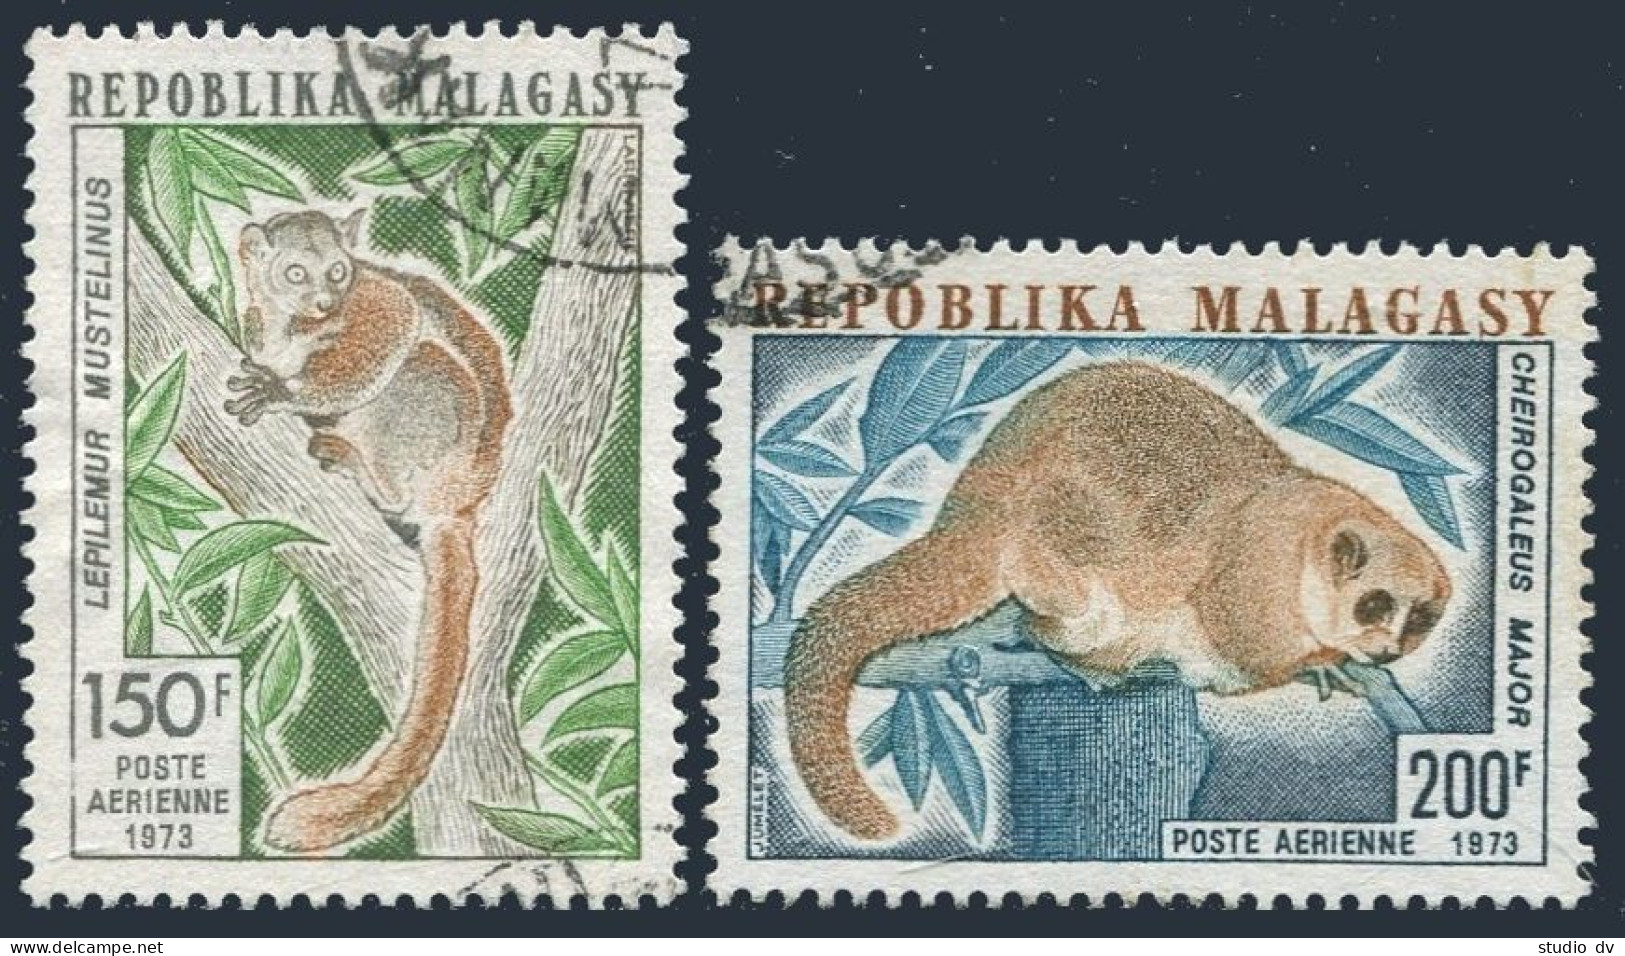 Malagasy C117-C118,CTO.Michel 700-701. Lemurs 1973. - Madagascar (1960-...)